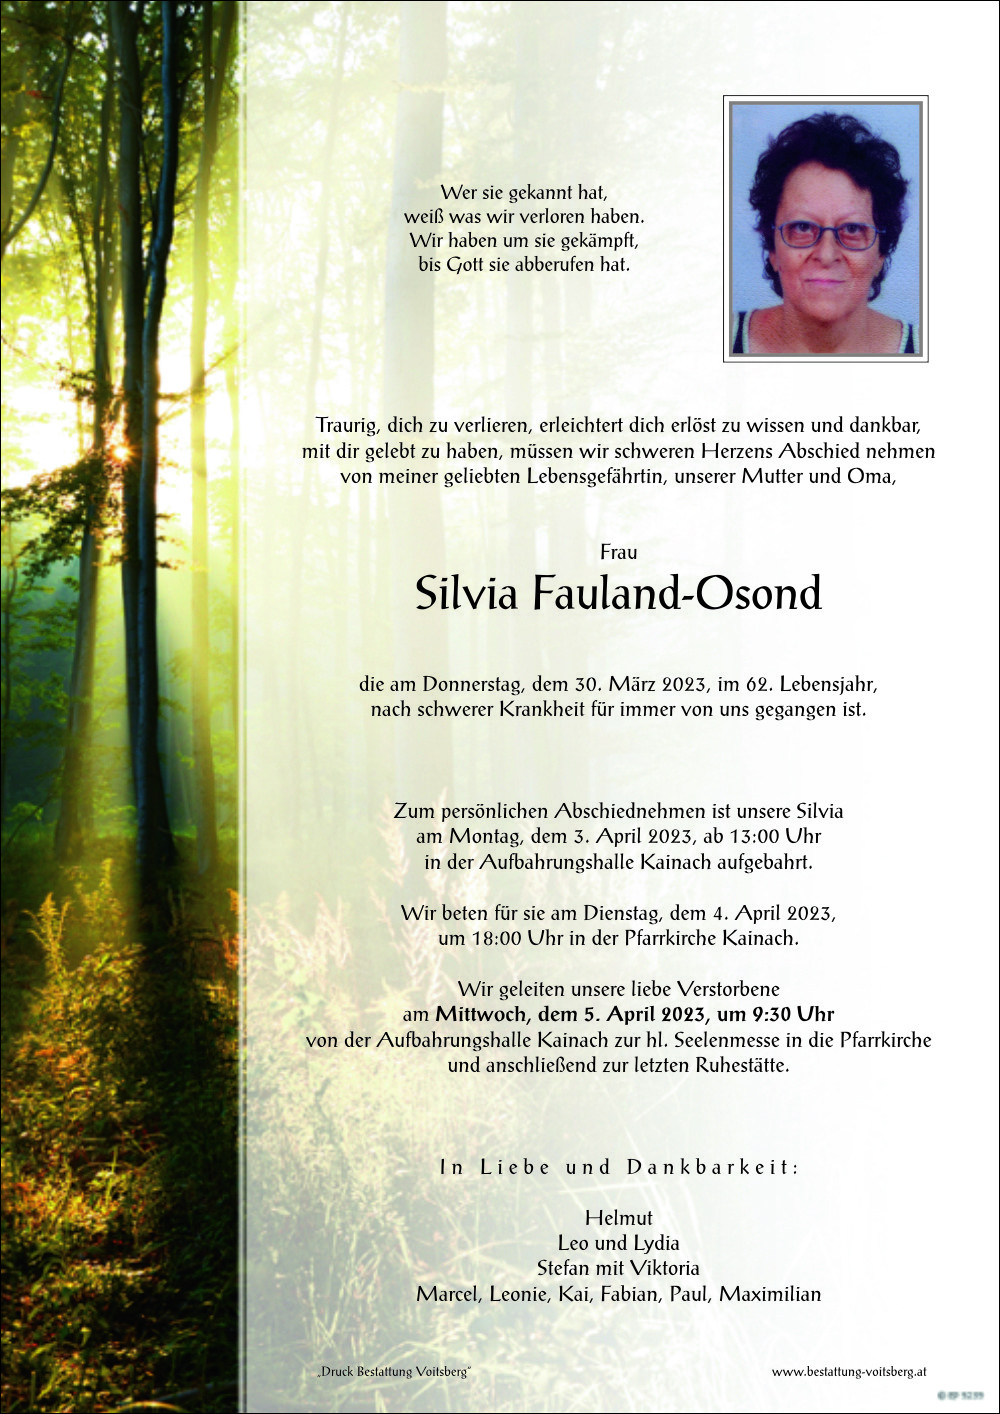 Silvia Fauland-Osond